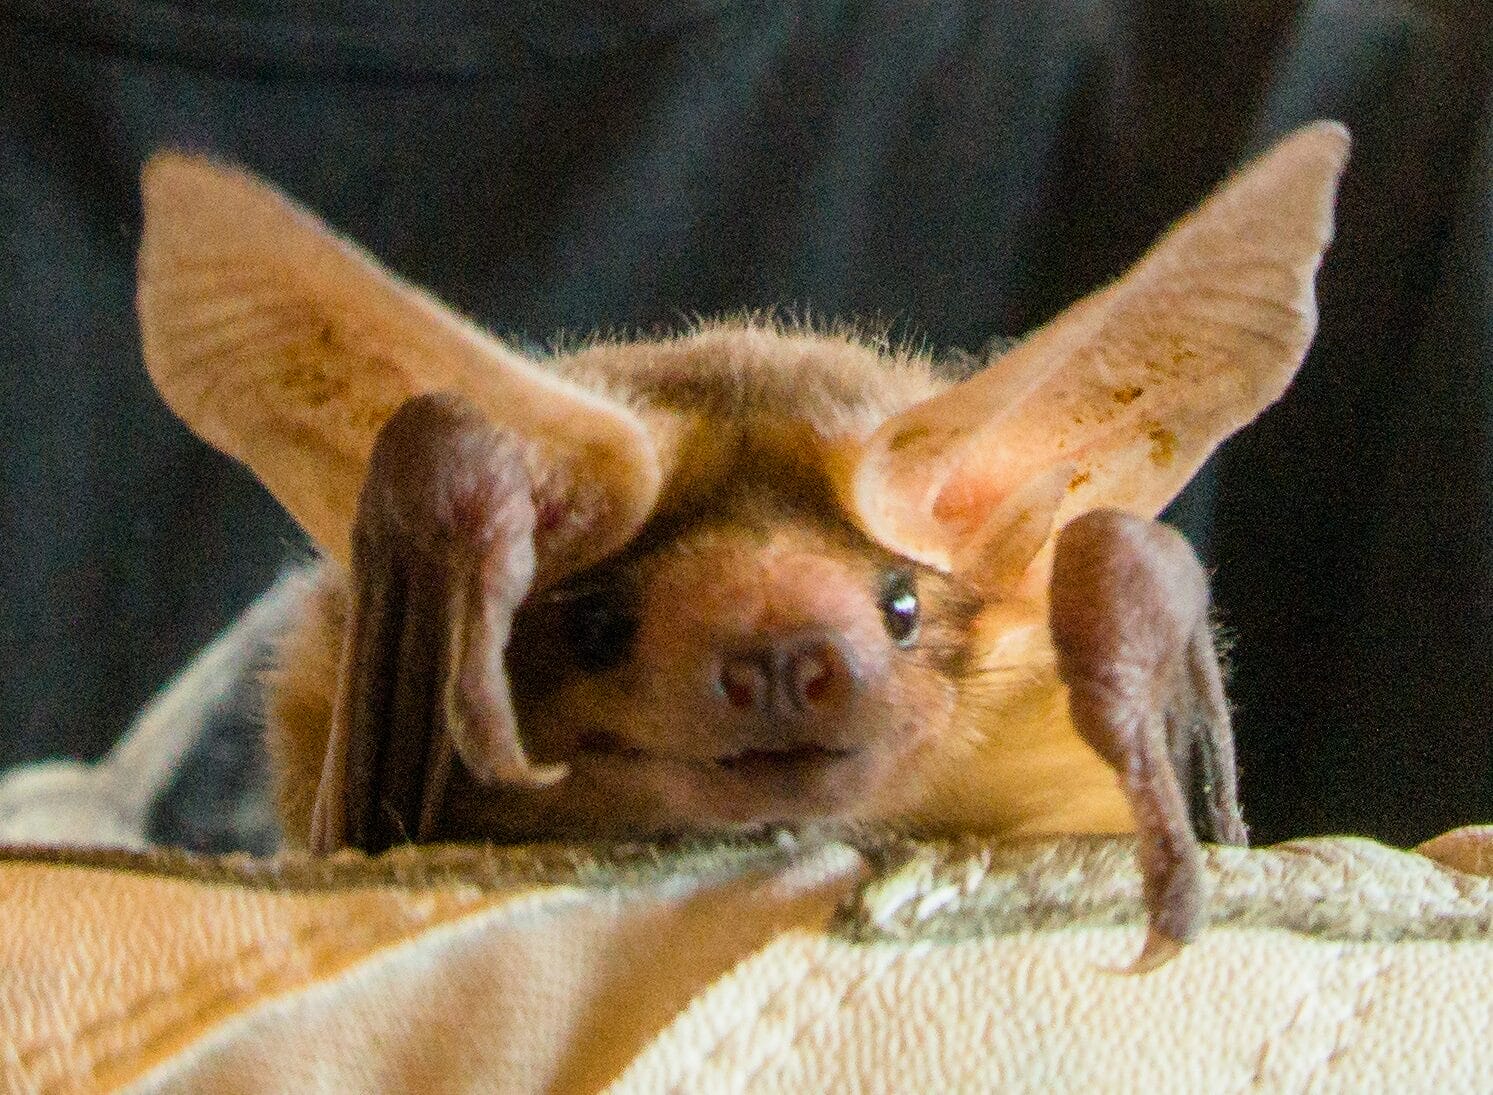 NorCal Bats | Santa Teresa Lib